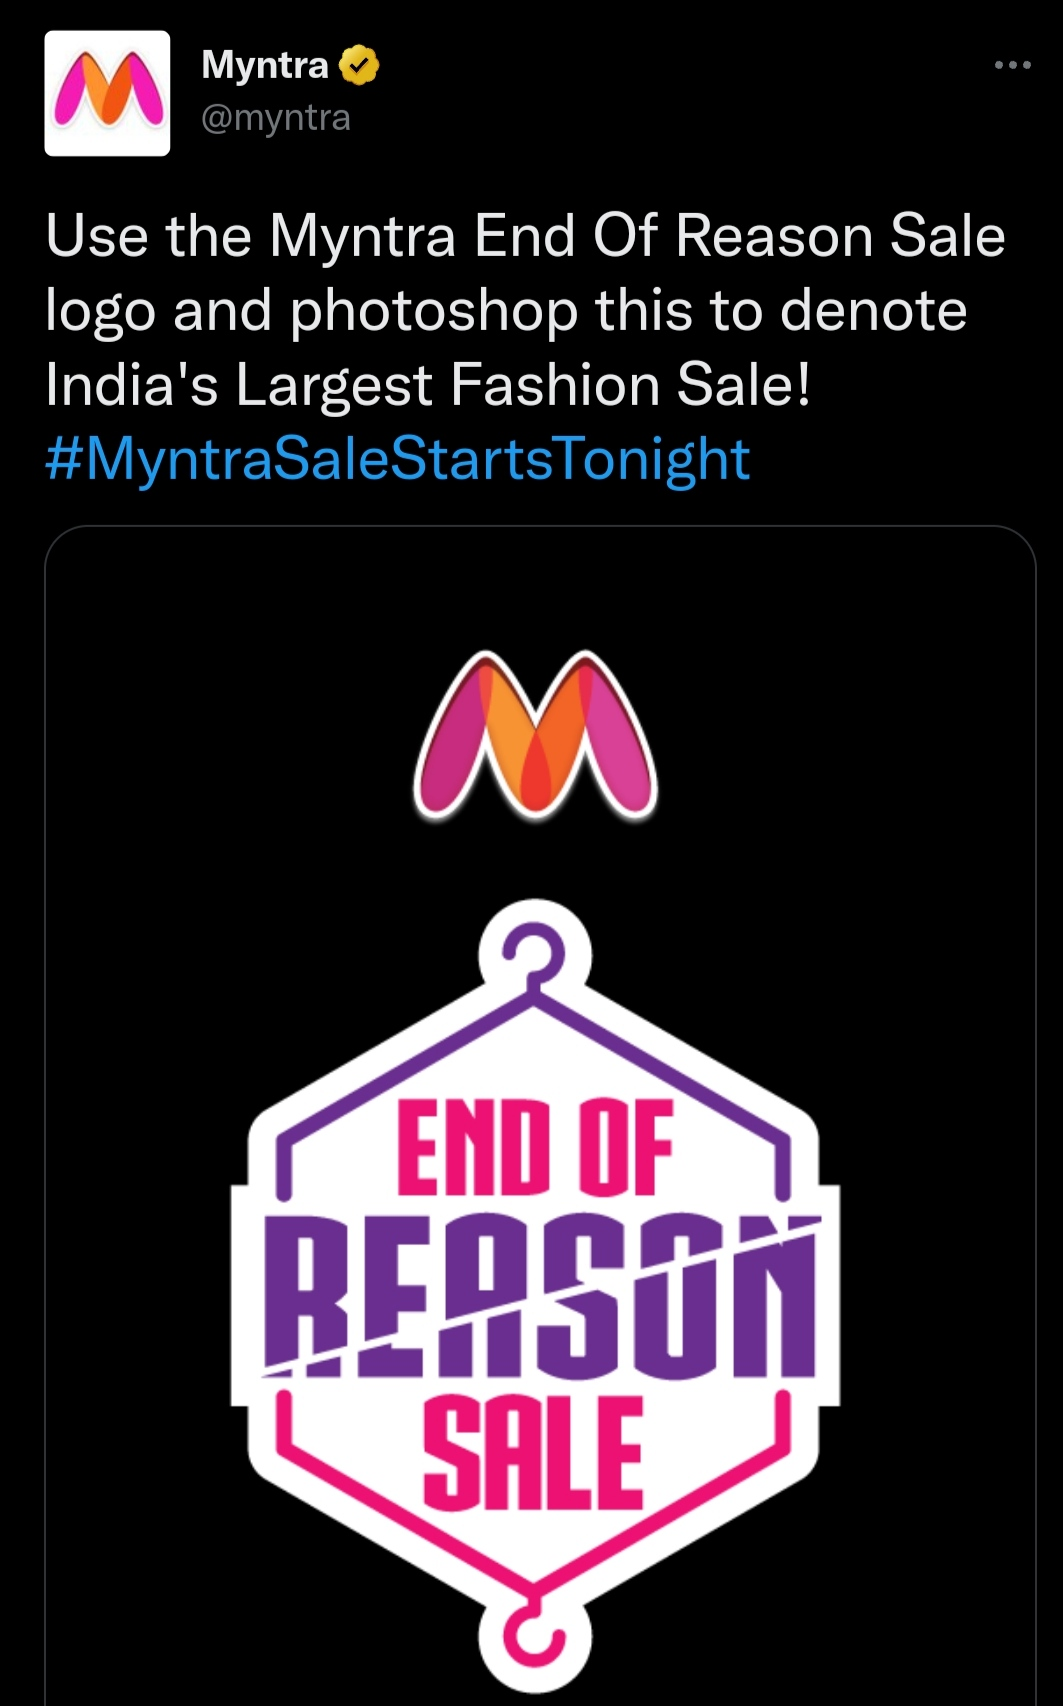 Myntra's End of Reason Sale Twitter Promotion